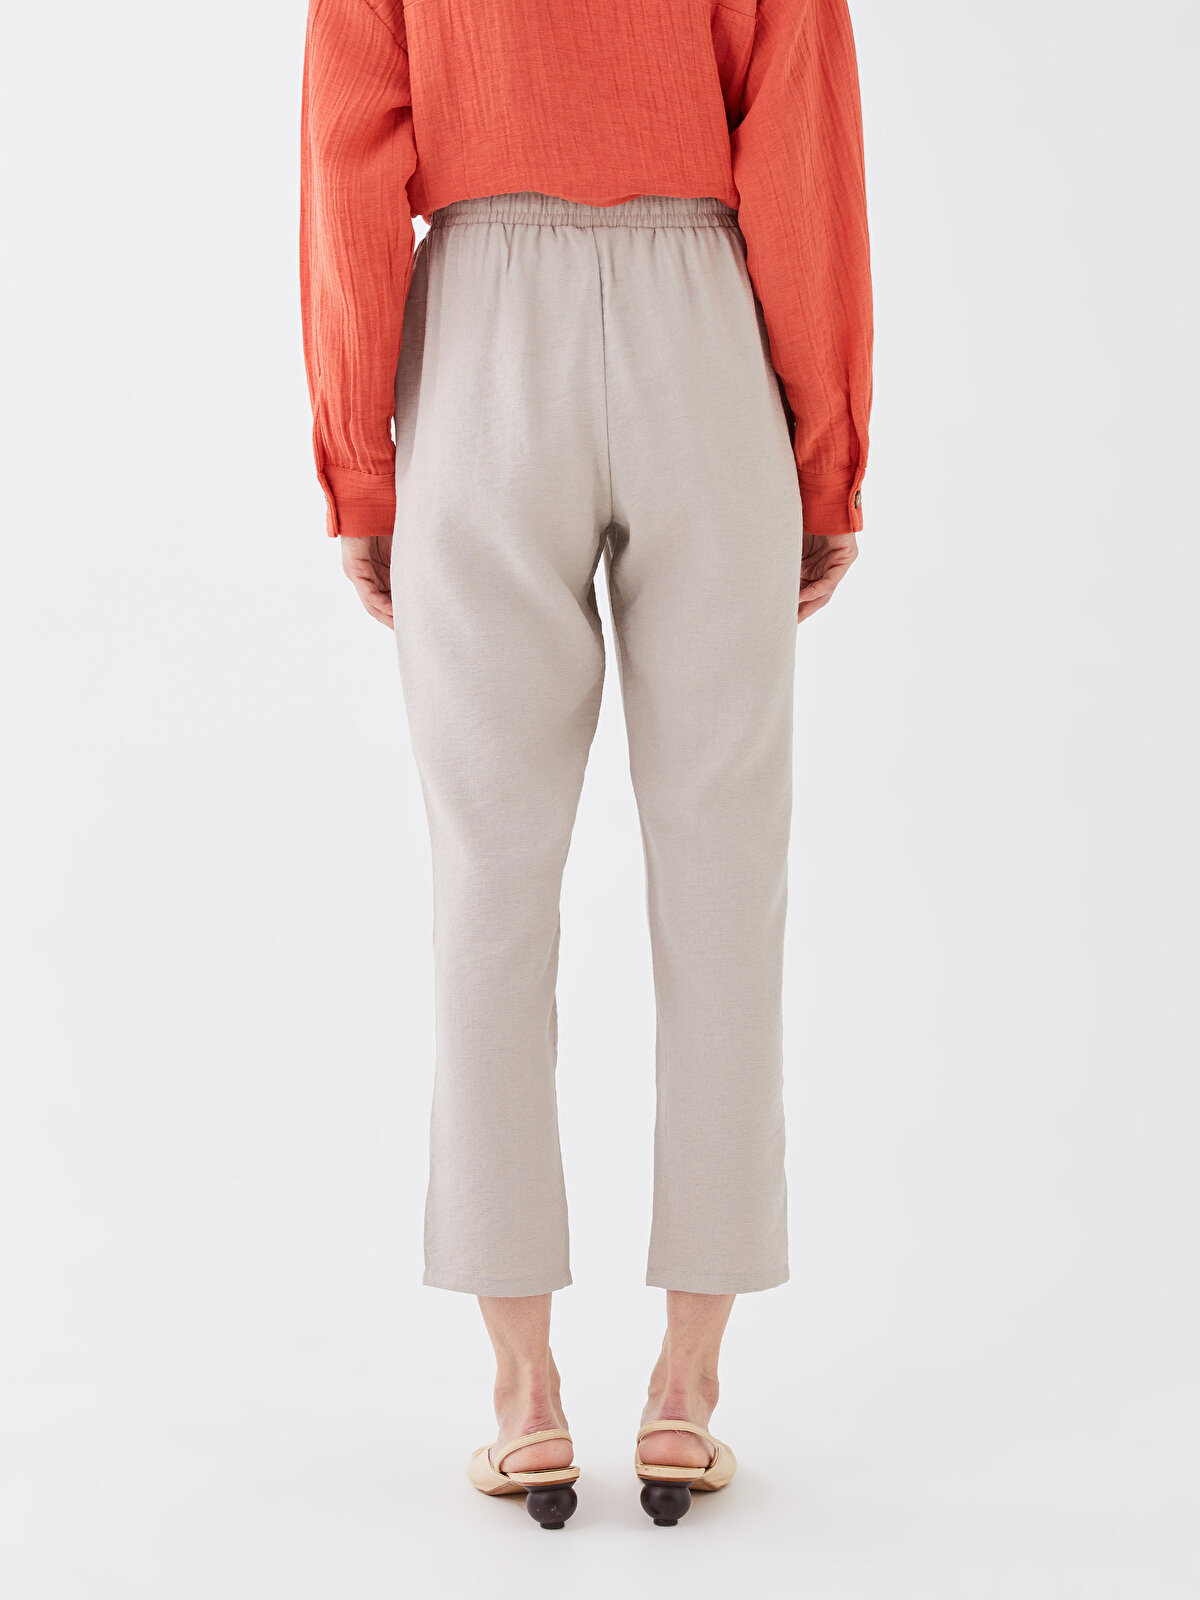 Trend Alaçatı Stili Women's Red High Waist Carrot Pants ALC-X11148